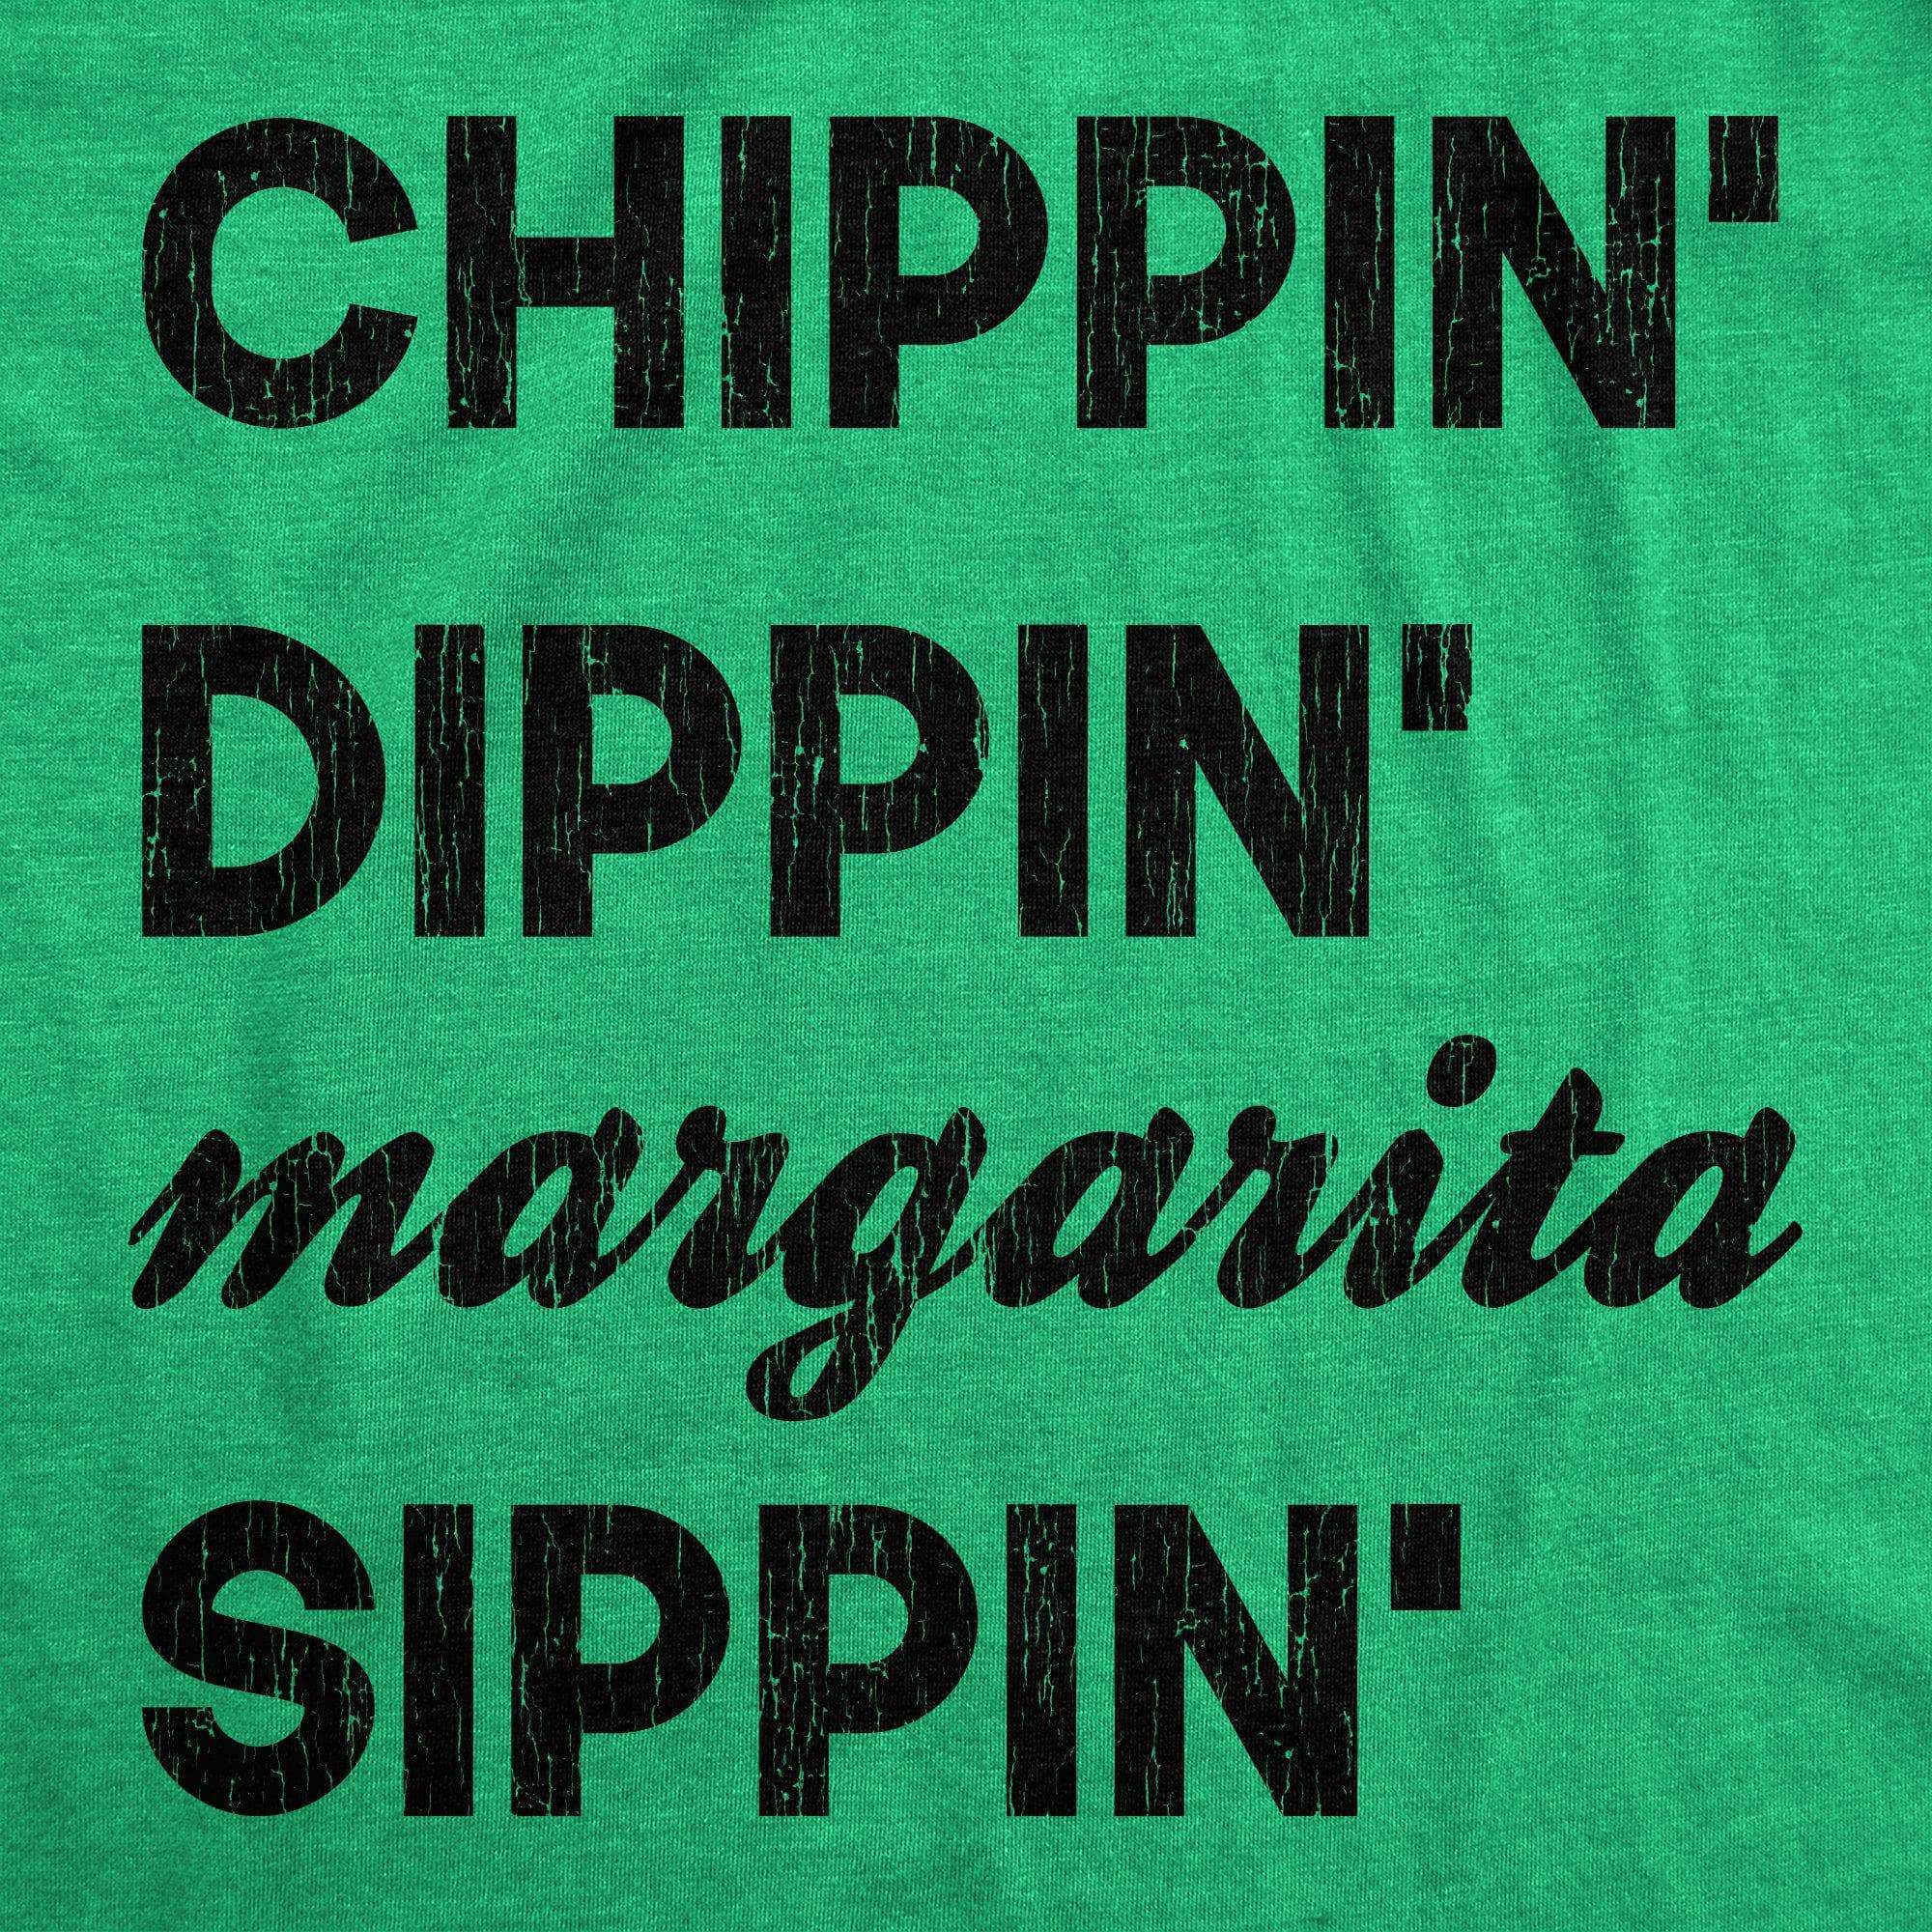 Chippin Dippin Margarita Sippin Women's Tshirt - Crazy Dog T-Shirts